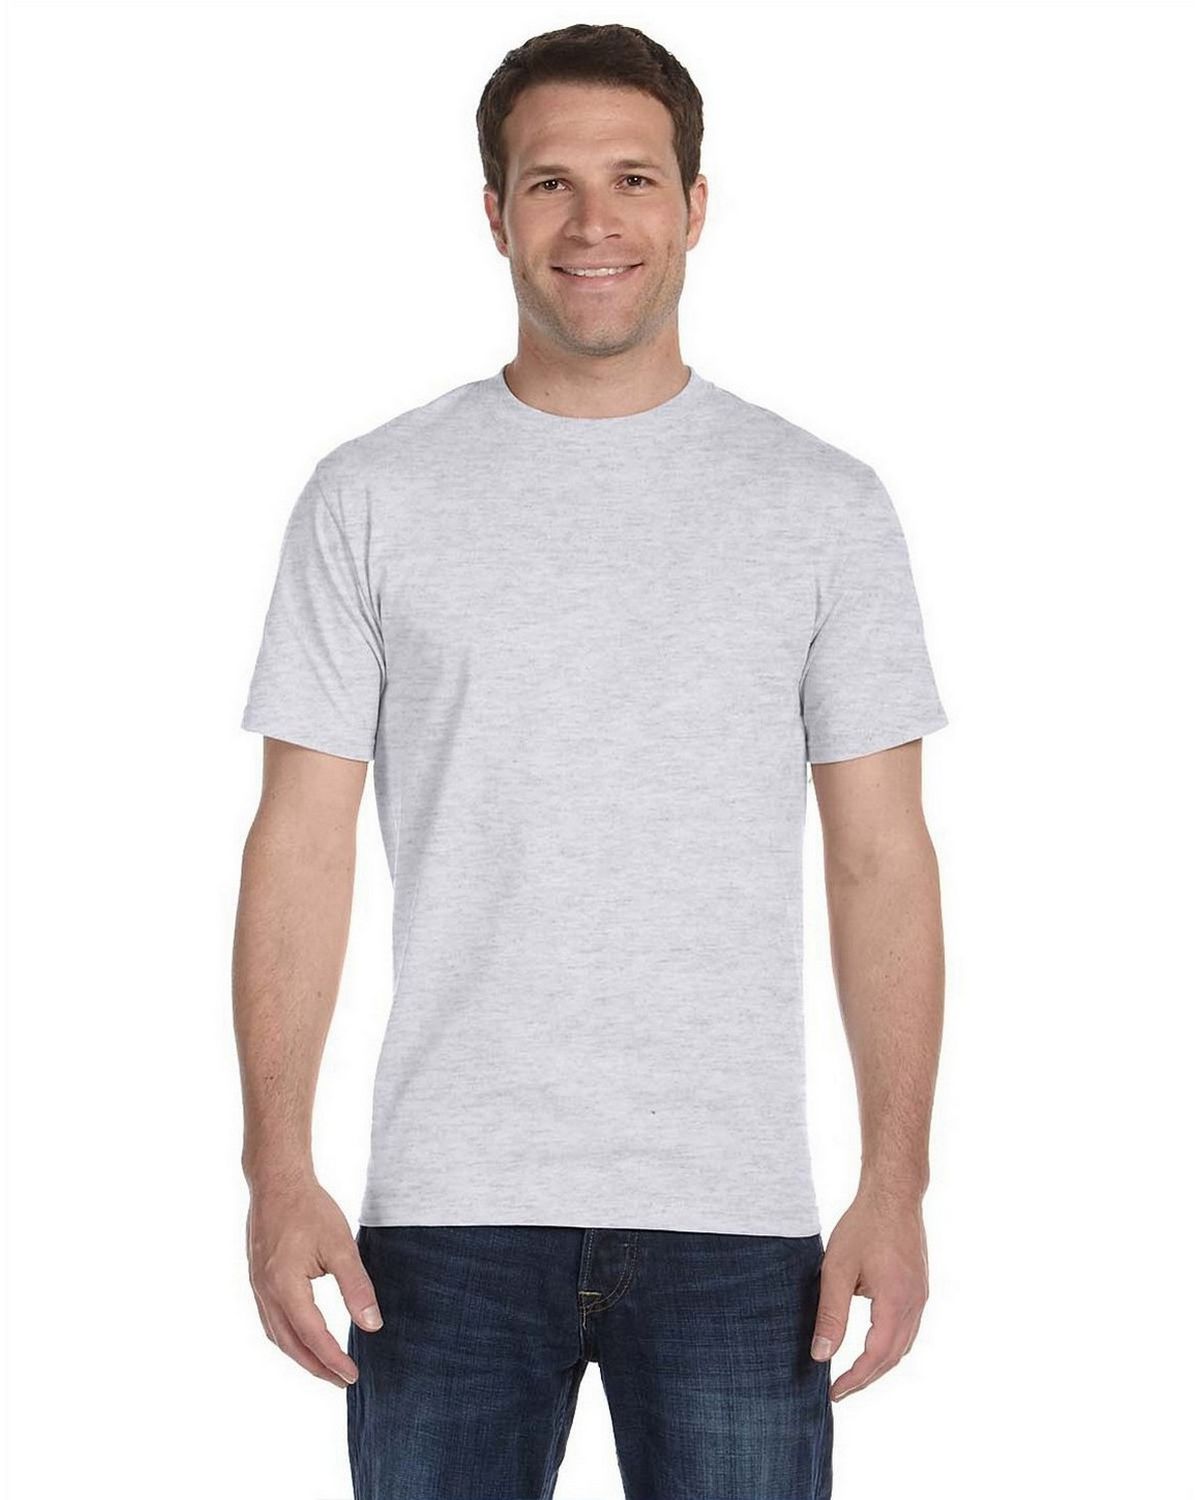 5280 Hanes® ComfortSoft® 100% Cotton T-Shirt - Hit Promotional